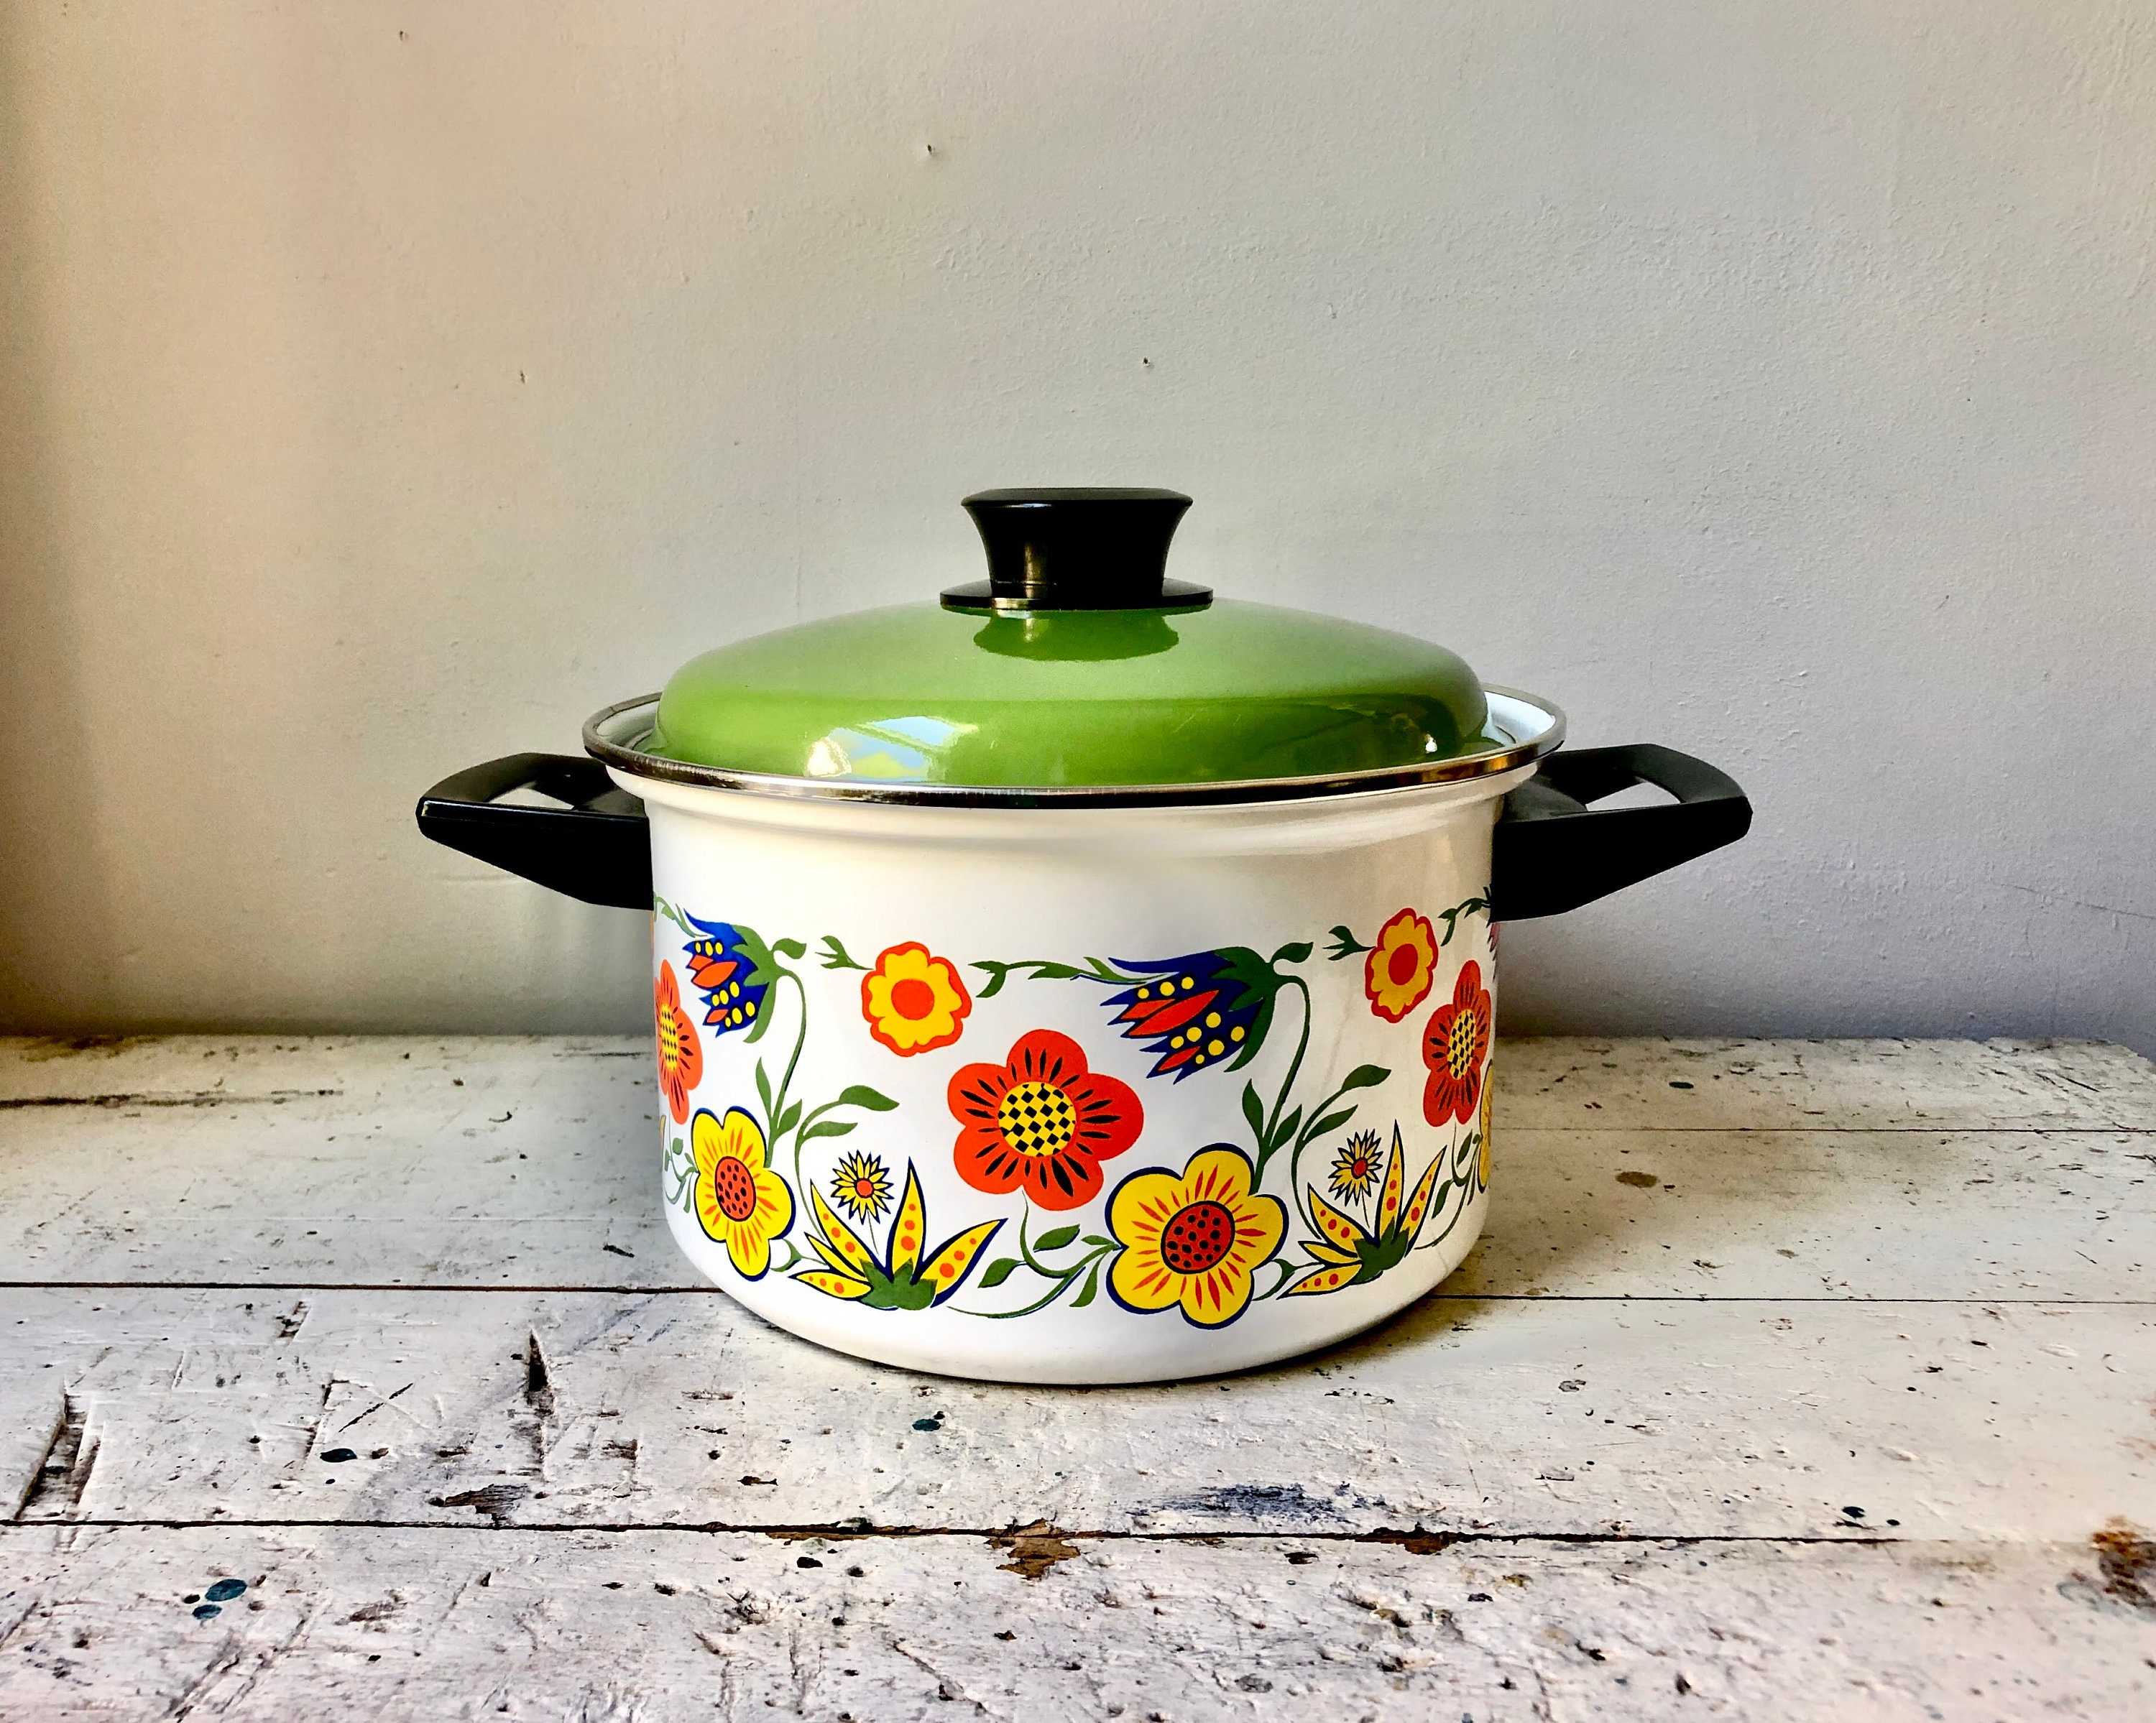 Retro Floral Enamel Cookware Set Sauce Pots Pans Vtg Kitchen enamelwar